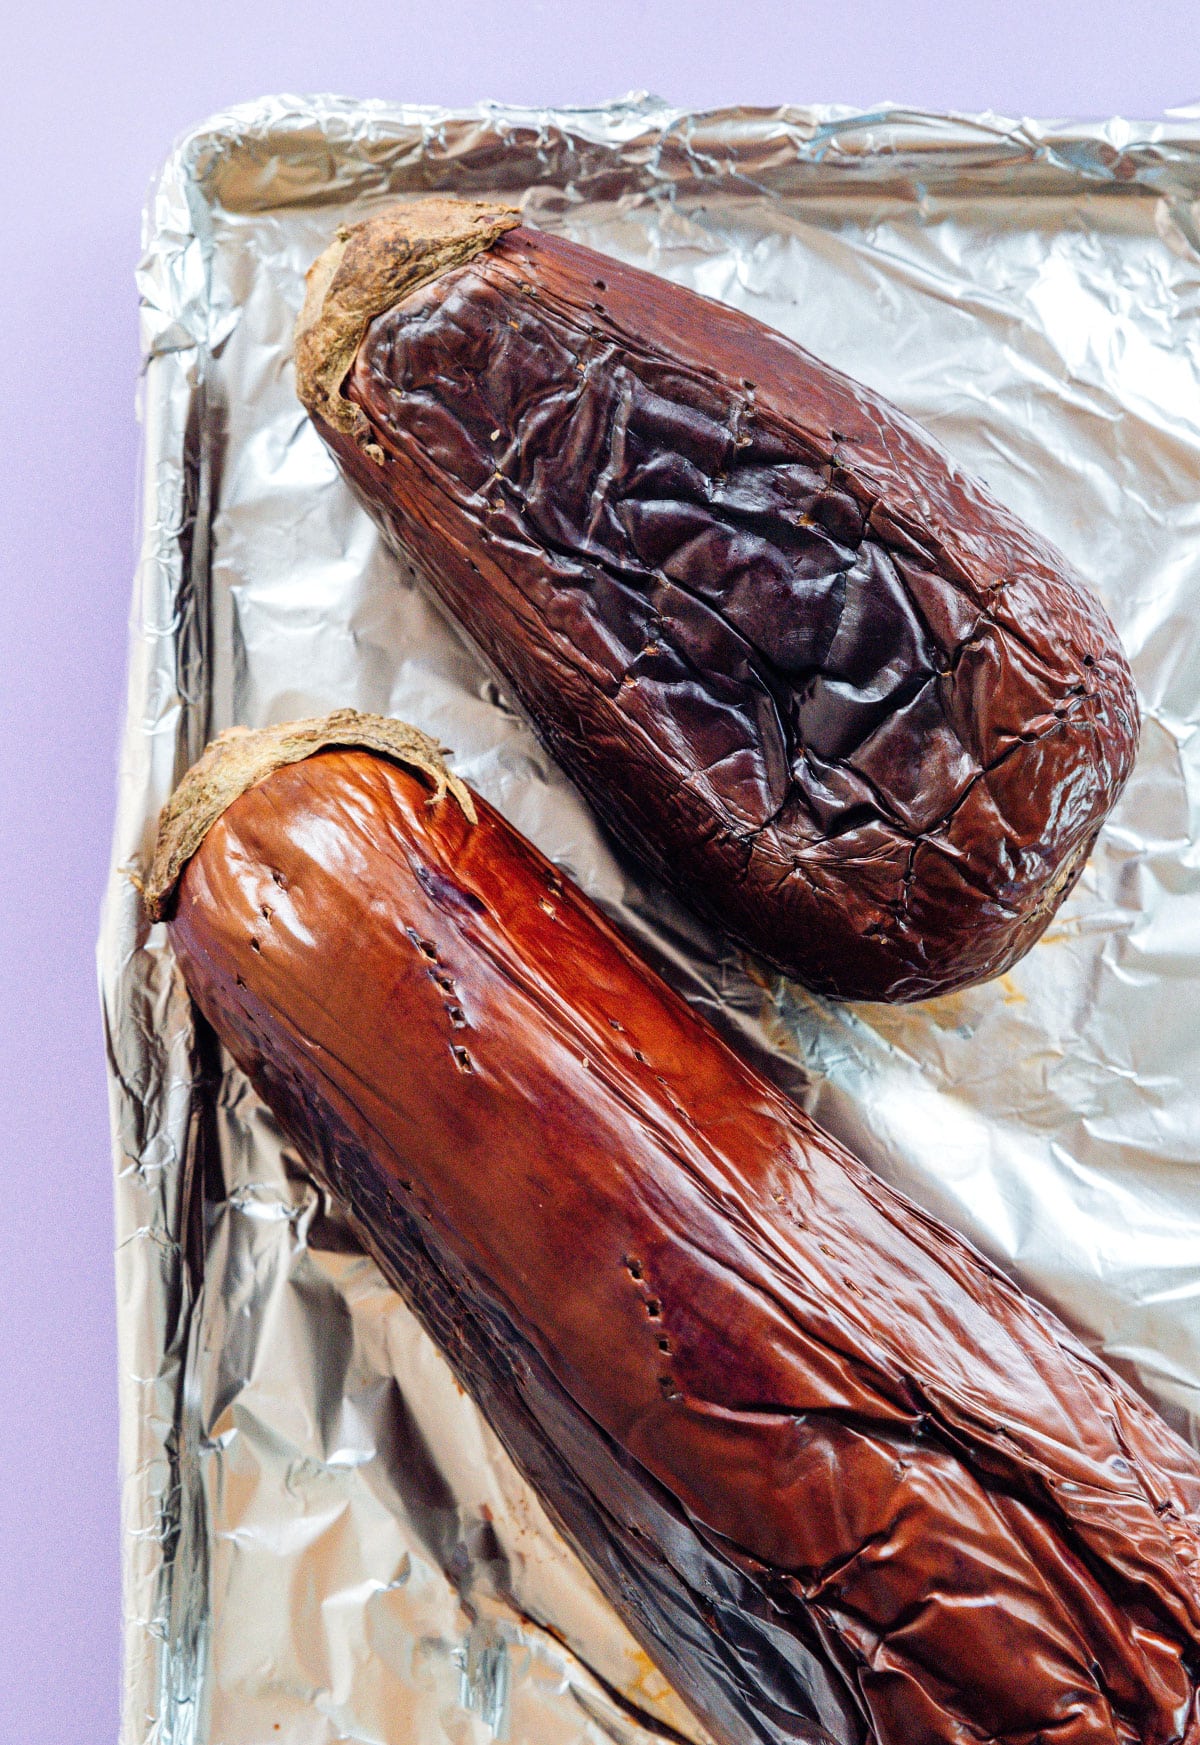 Roasted eggplants on a foil lined baking sheet.